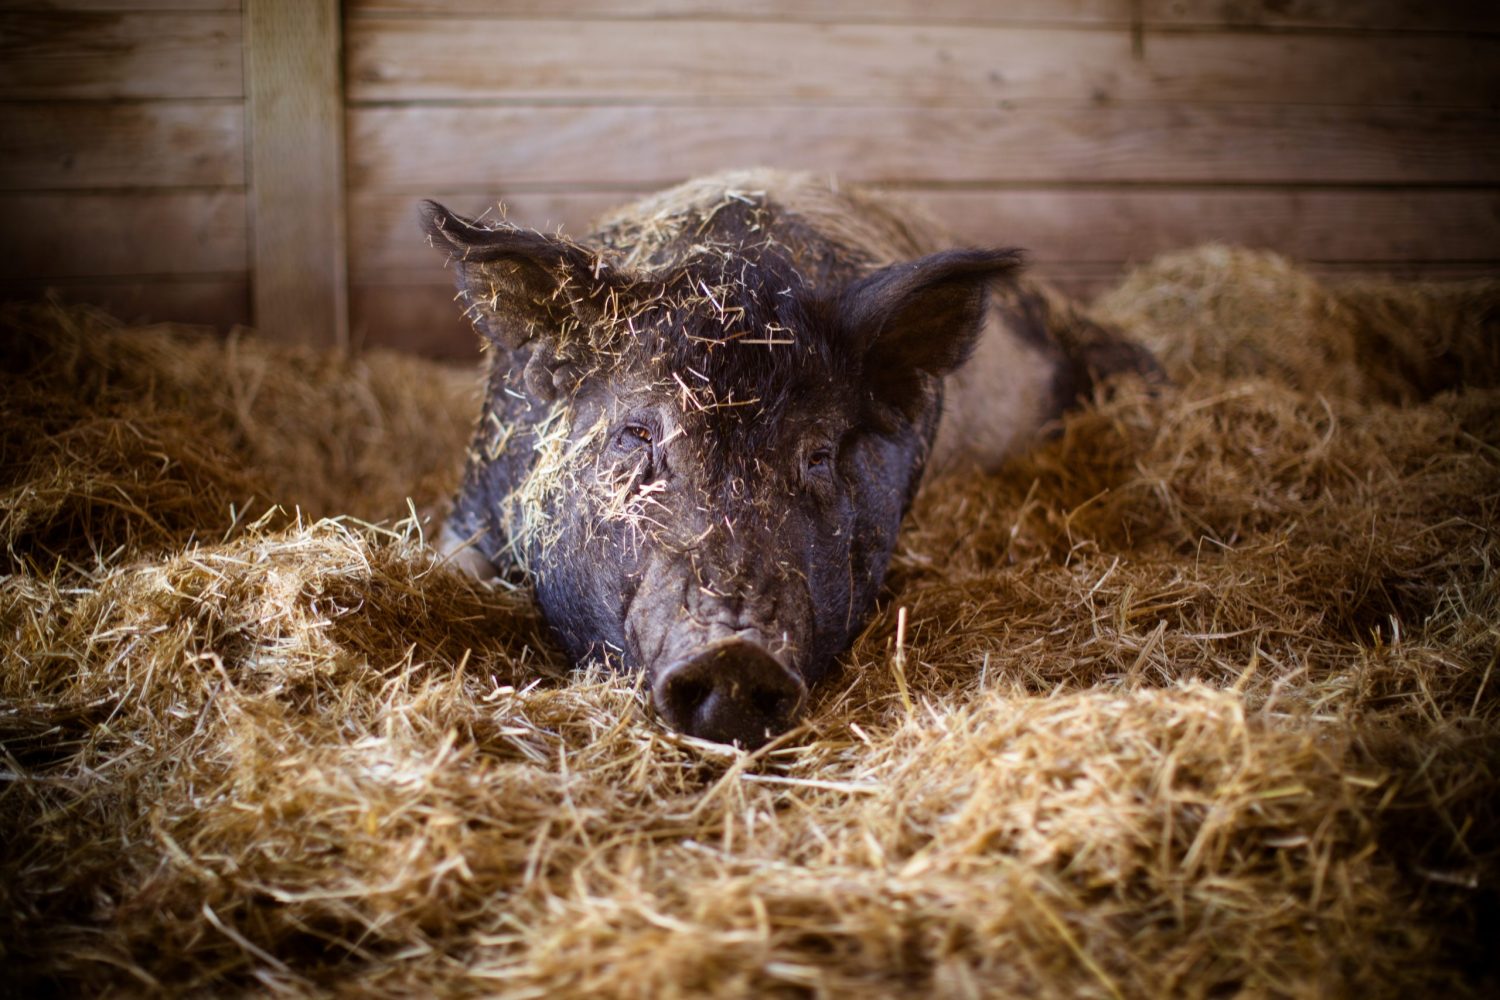 Reggie pig sleeping at Farm Sanctuary